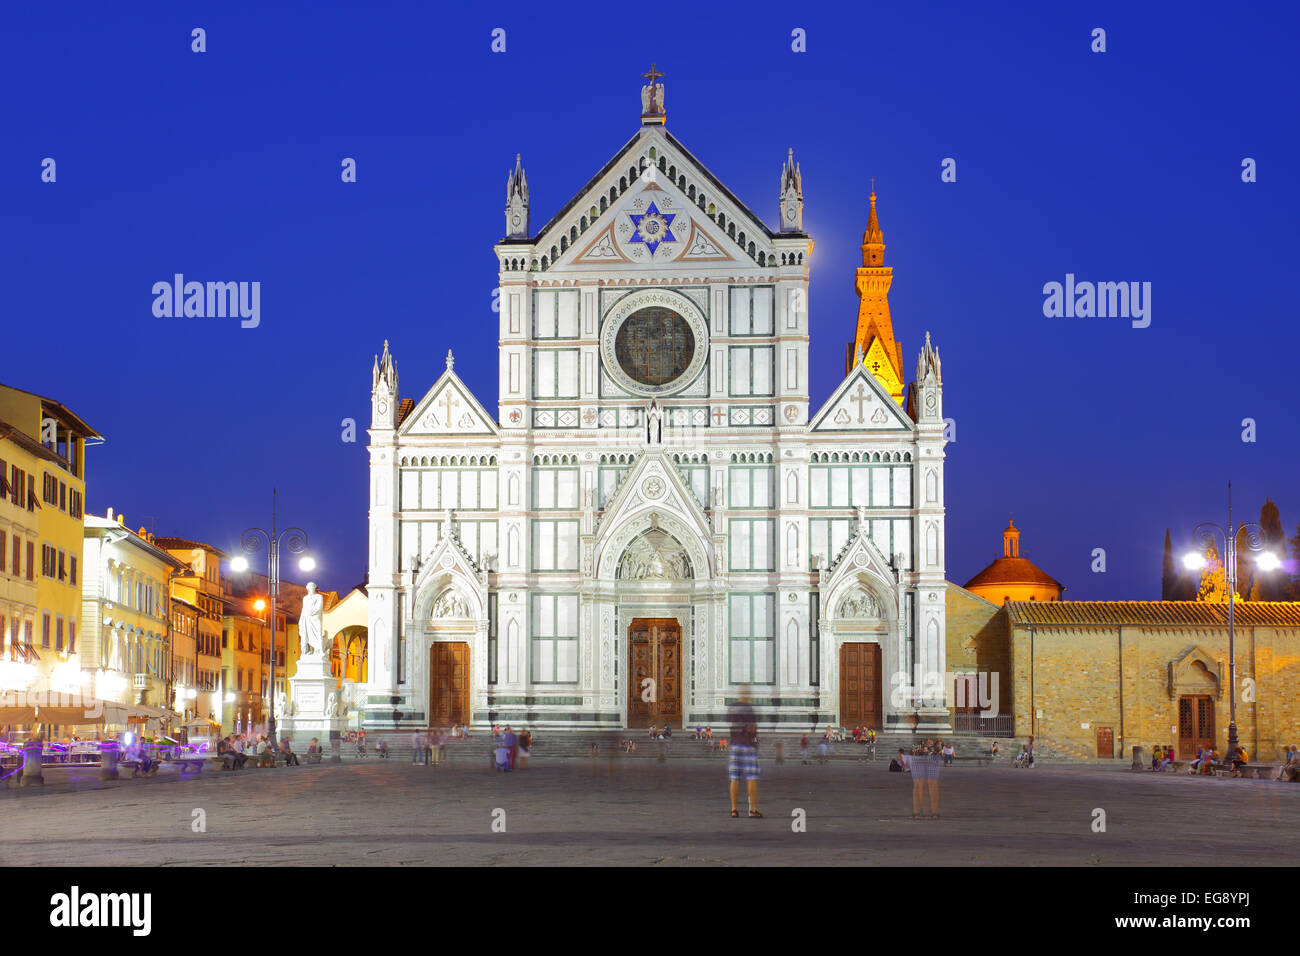 Basilica di Santa Croce in Florence at night, Italy Stock Photo